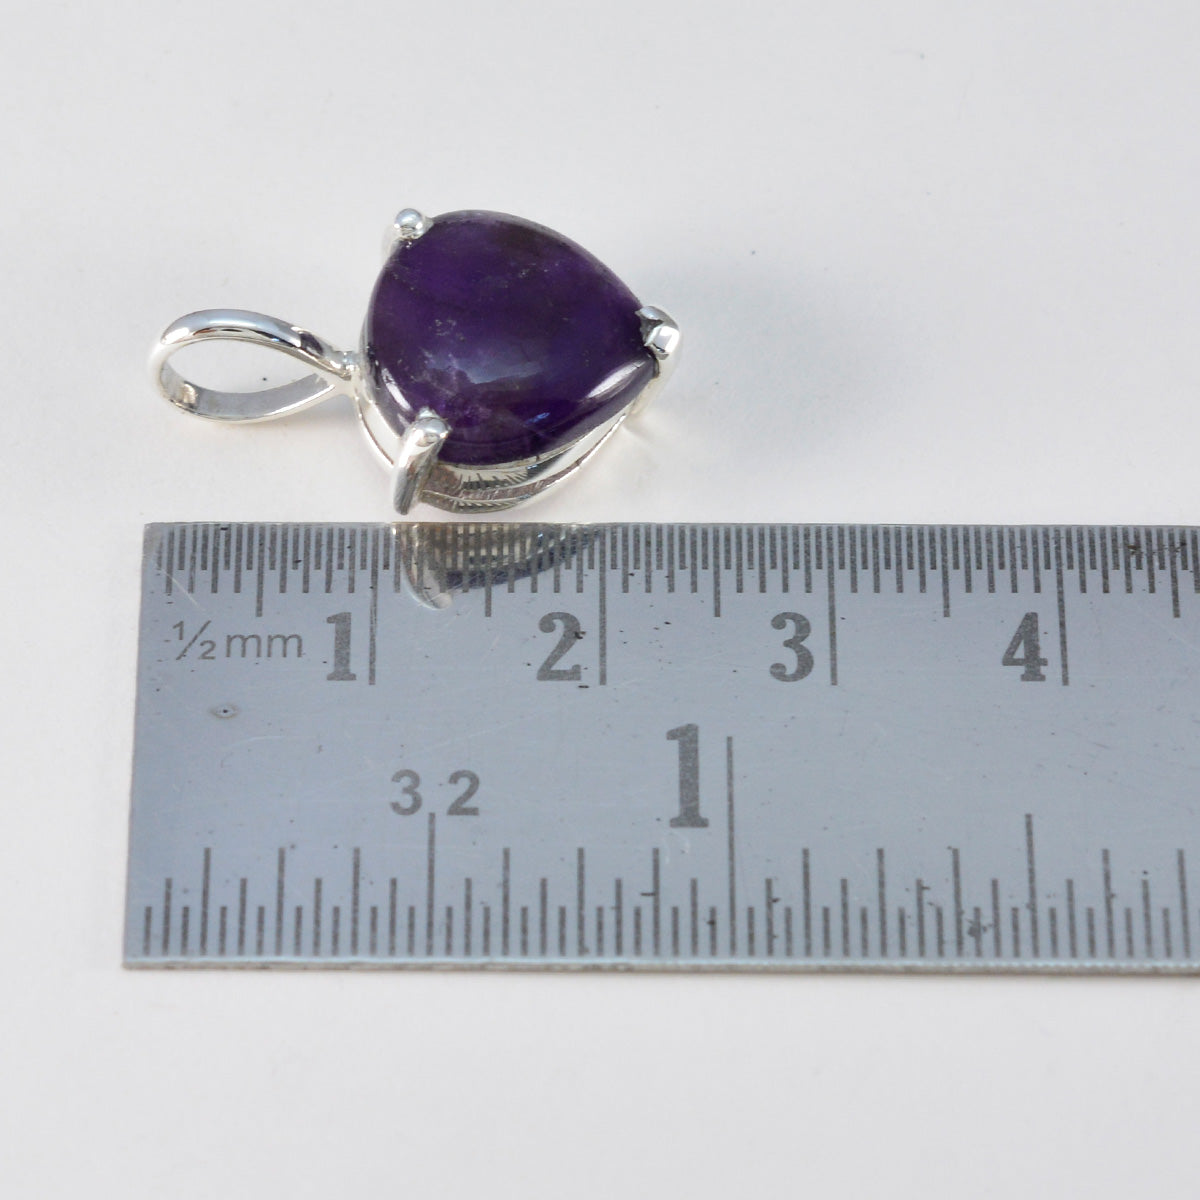 Riyo Hot Gemstone Heart Cabochon Purple Amethyst Sterling Silver Pendant Gift For Friend